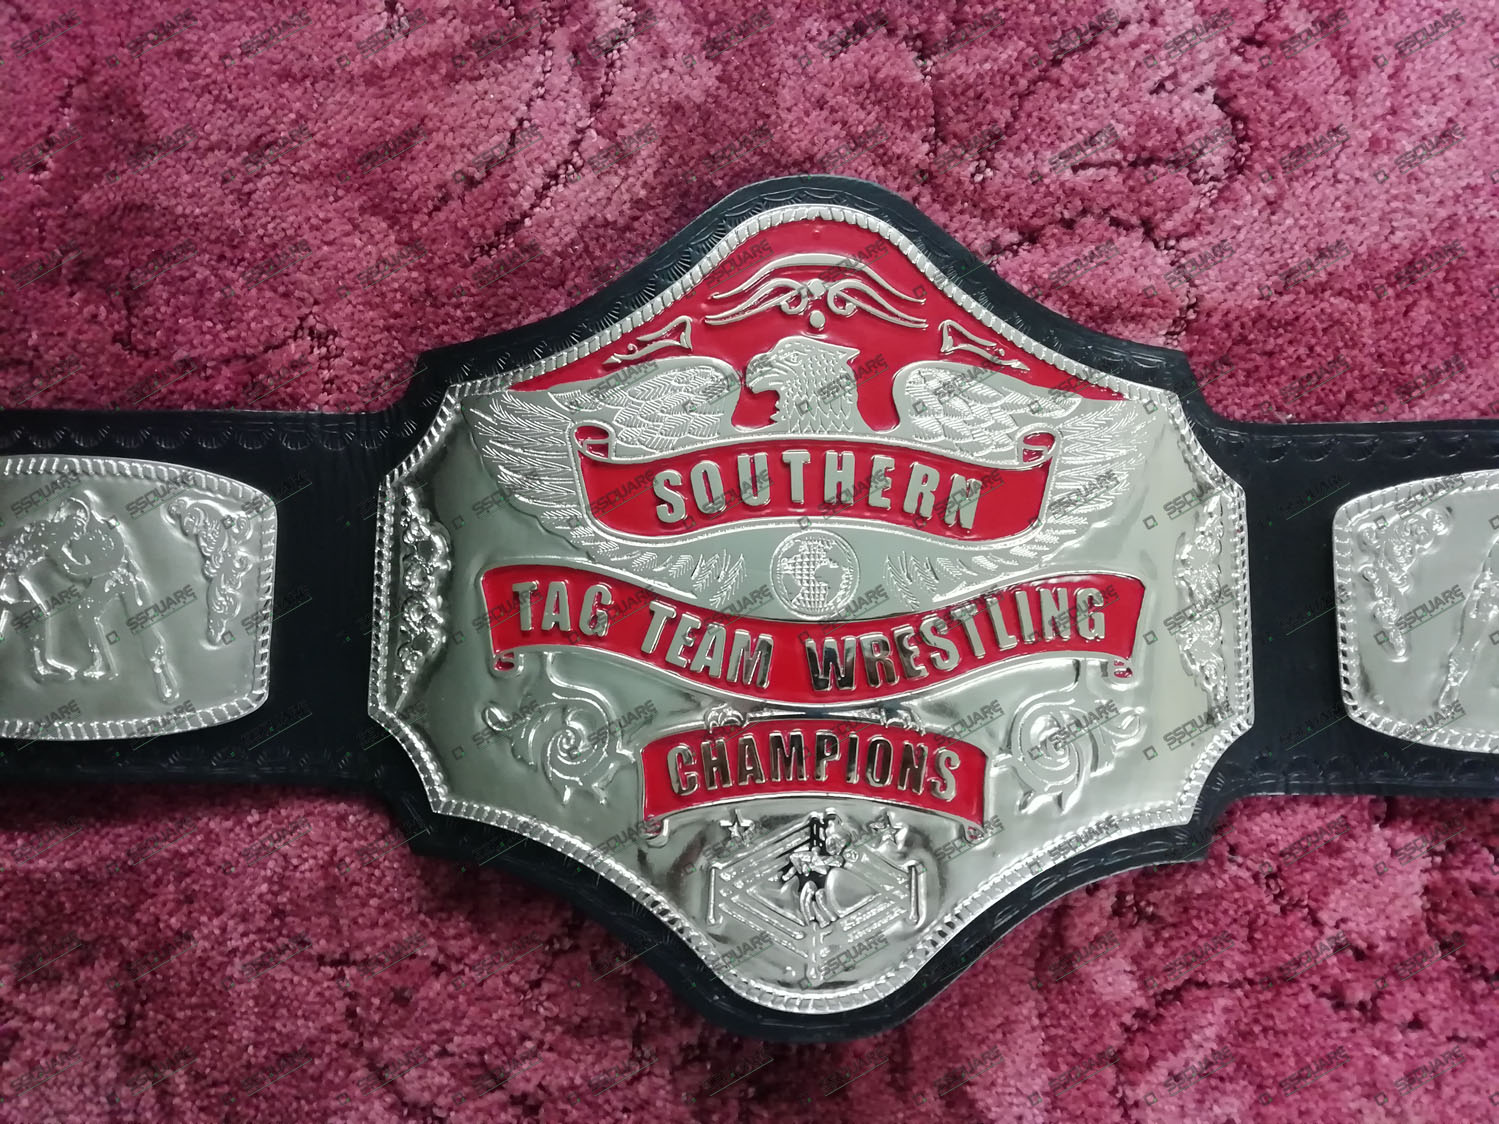 NWA Southern Tag team Wrestling Champion replica belt